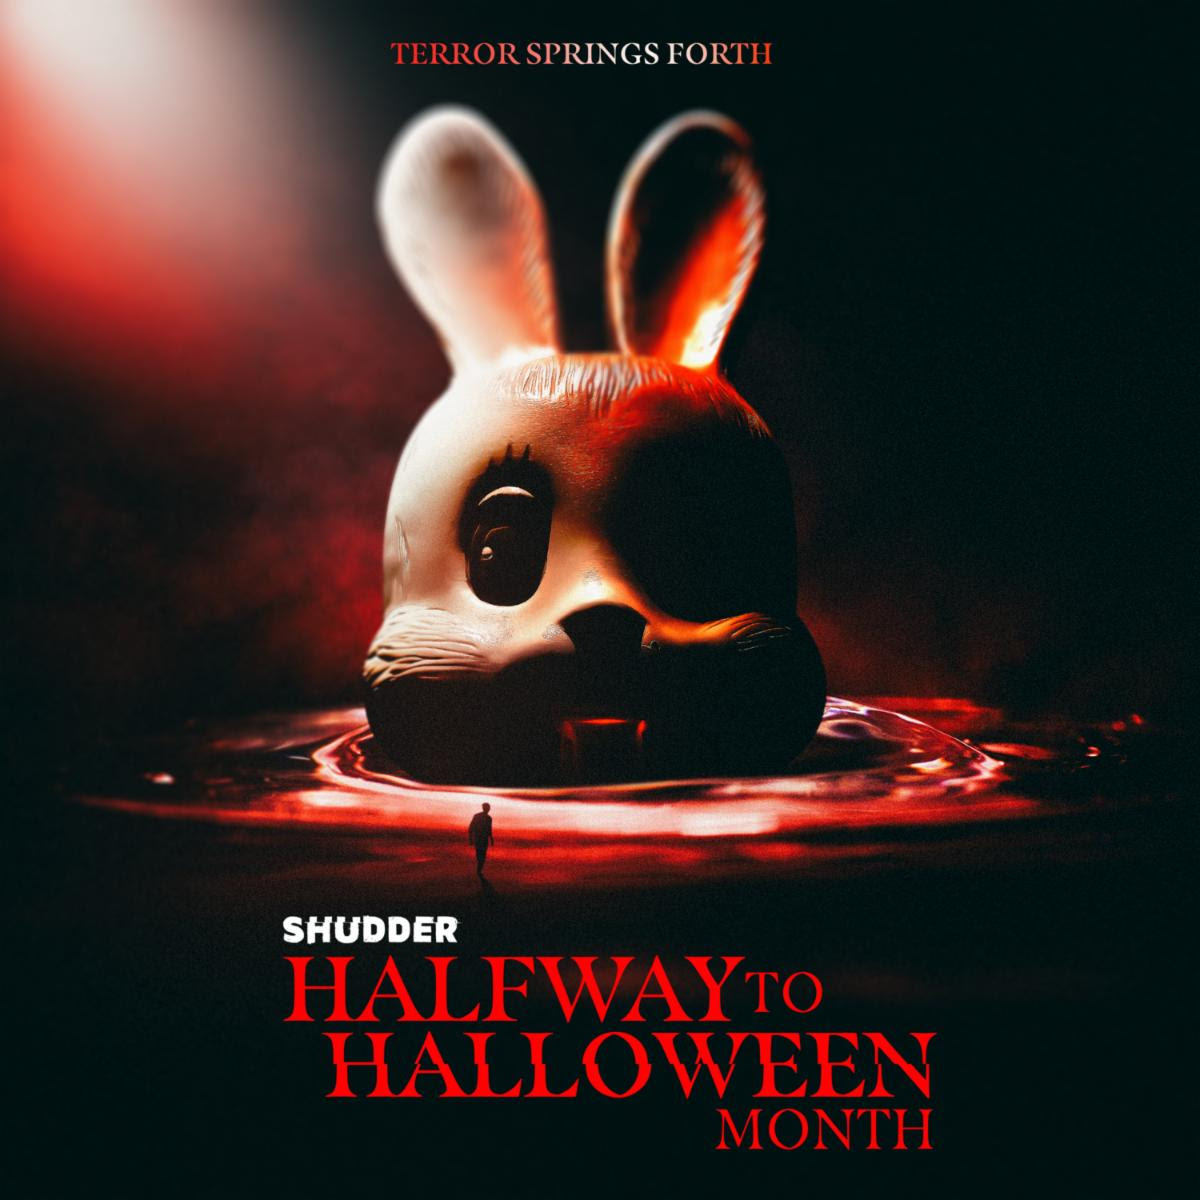 Shudder Annual “Halfway to Halloween” Features an Original Lineup of